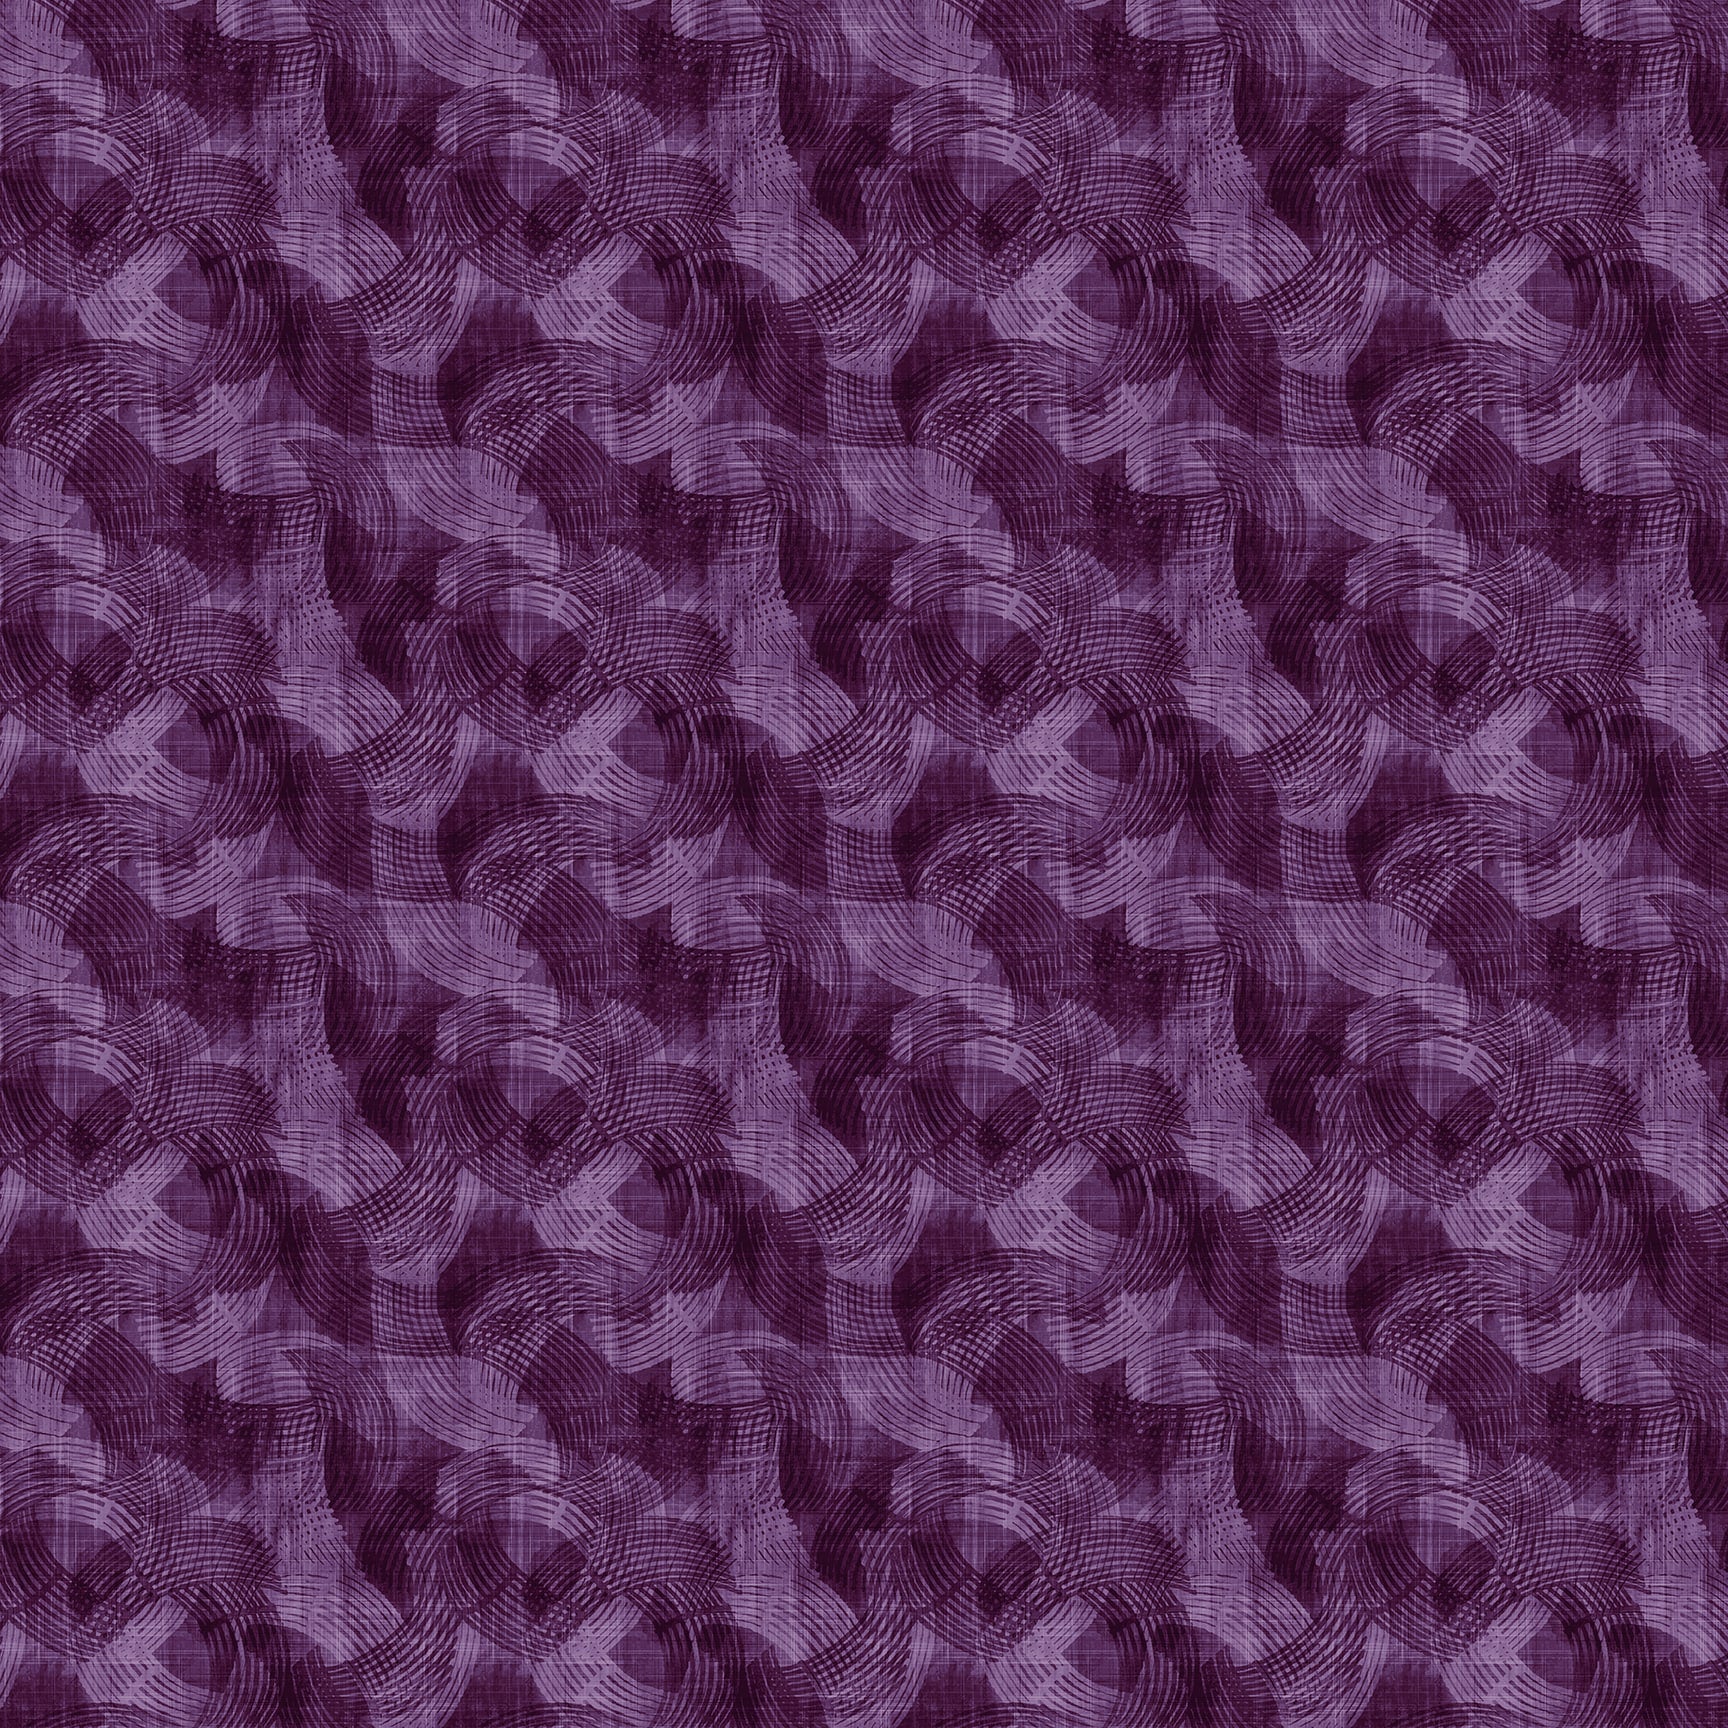 108" Crescent Quilt Backing Fabric - Textured Arcs in Purple - 2970-55